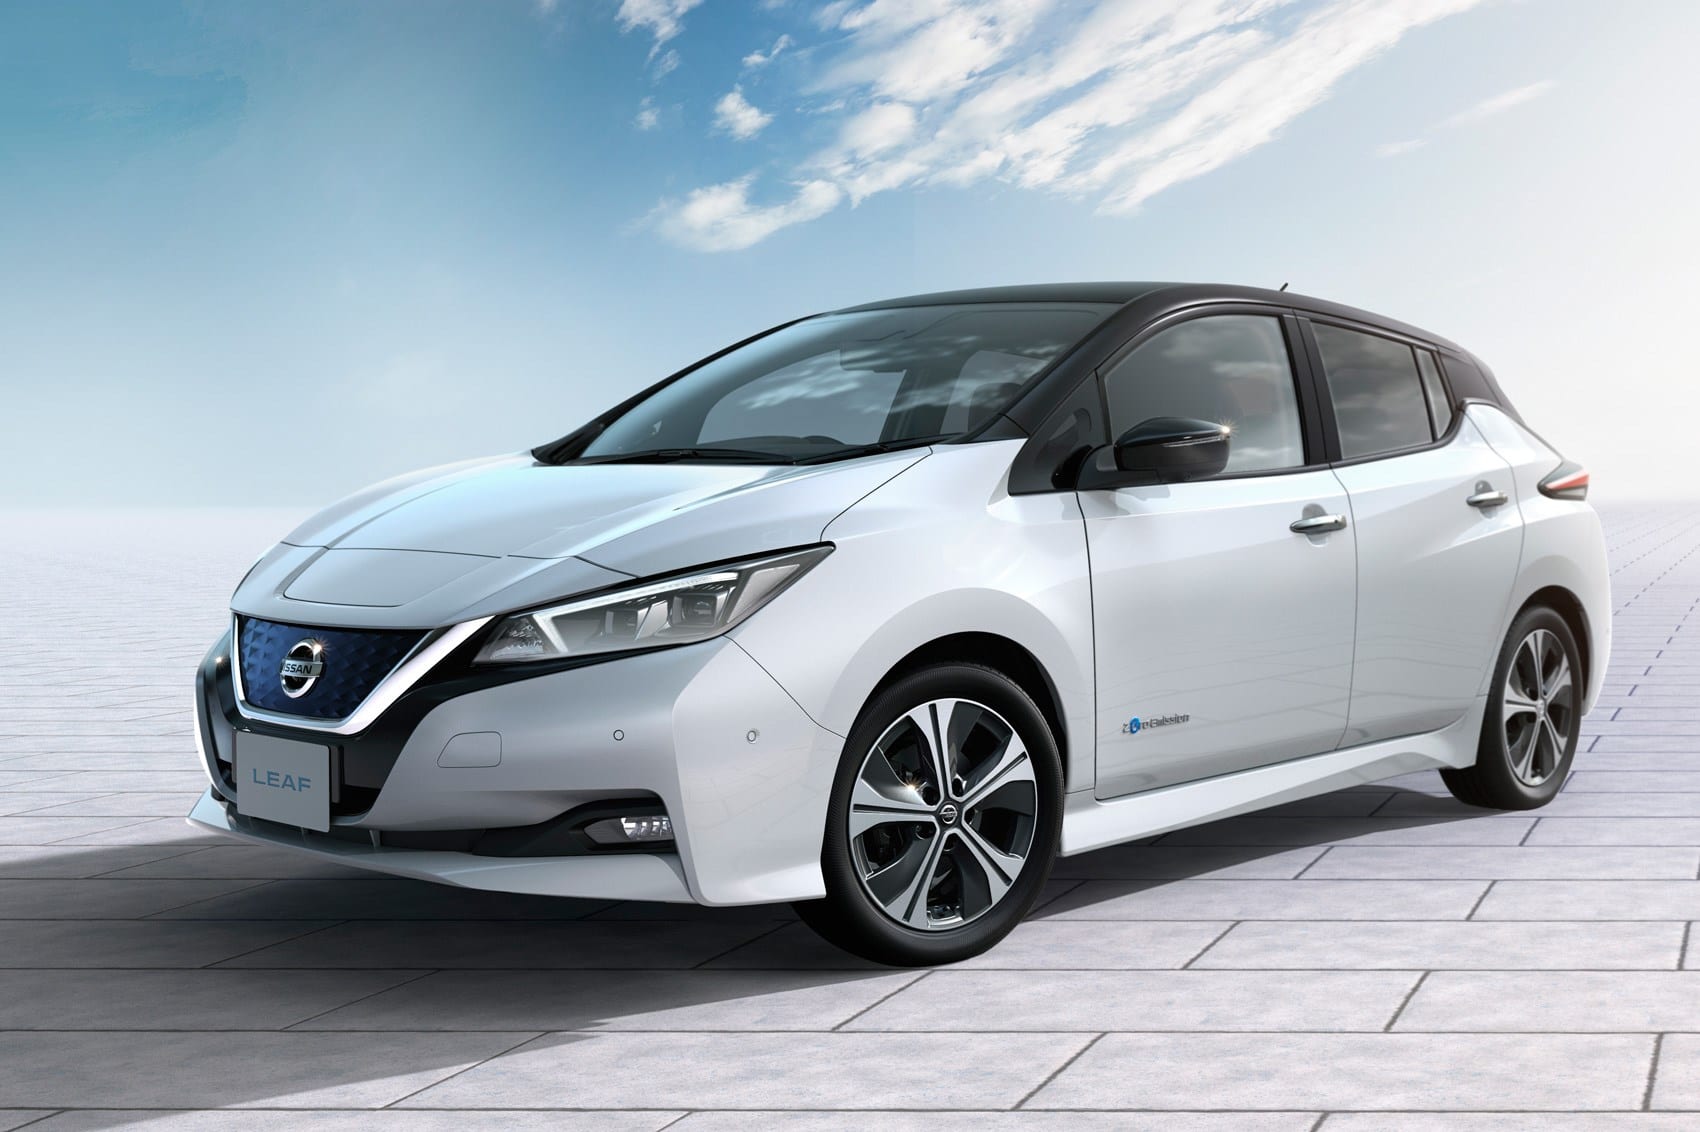 2019 Nissan LEAF Electric Car Wins Australia's Green Innovation Award